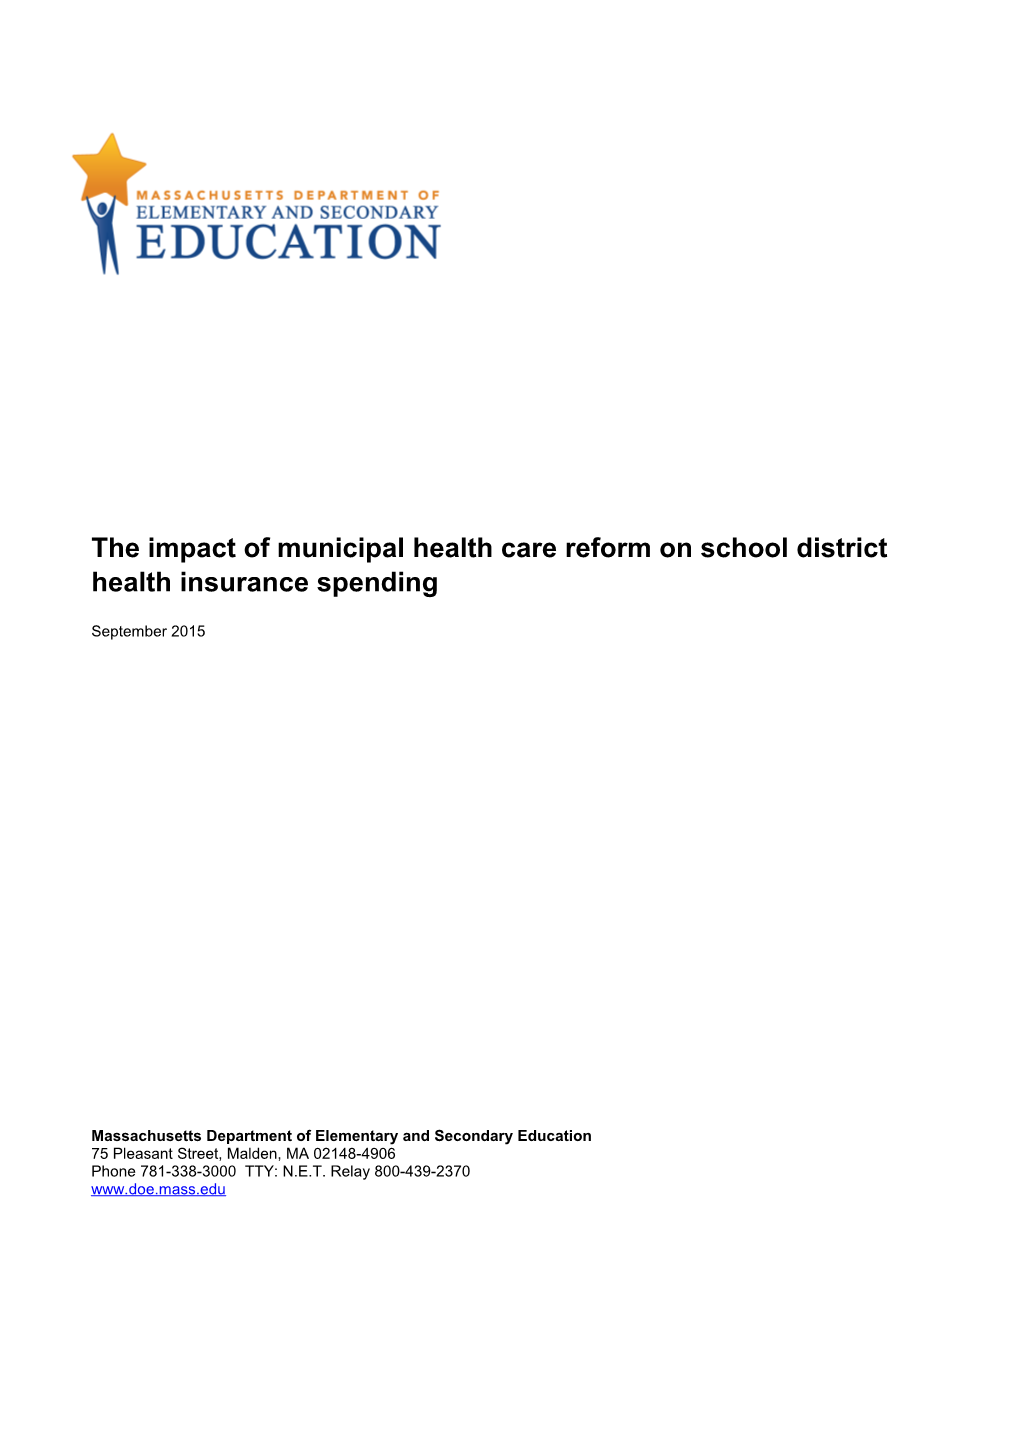 Impact of Municipal Health Care Reform on Health Insurance Spending (September 2015)